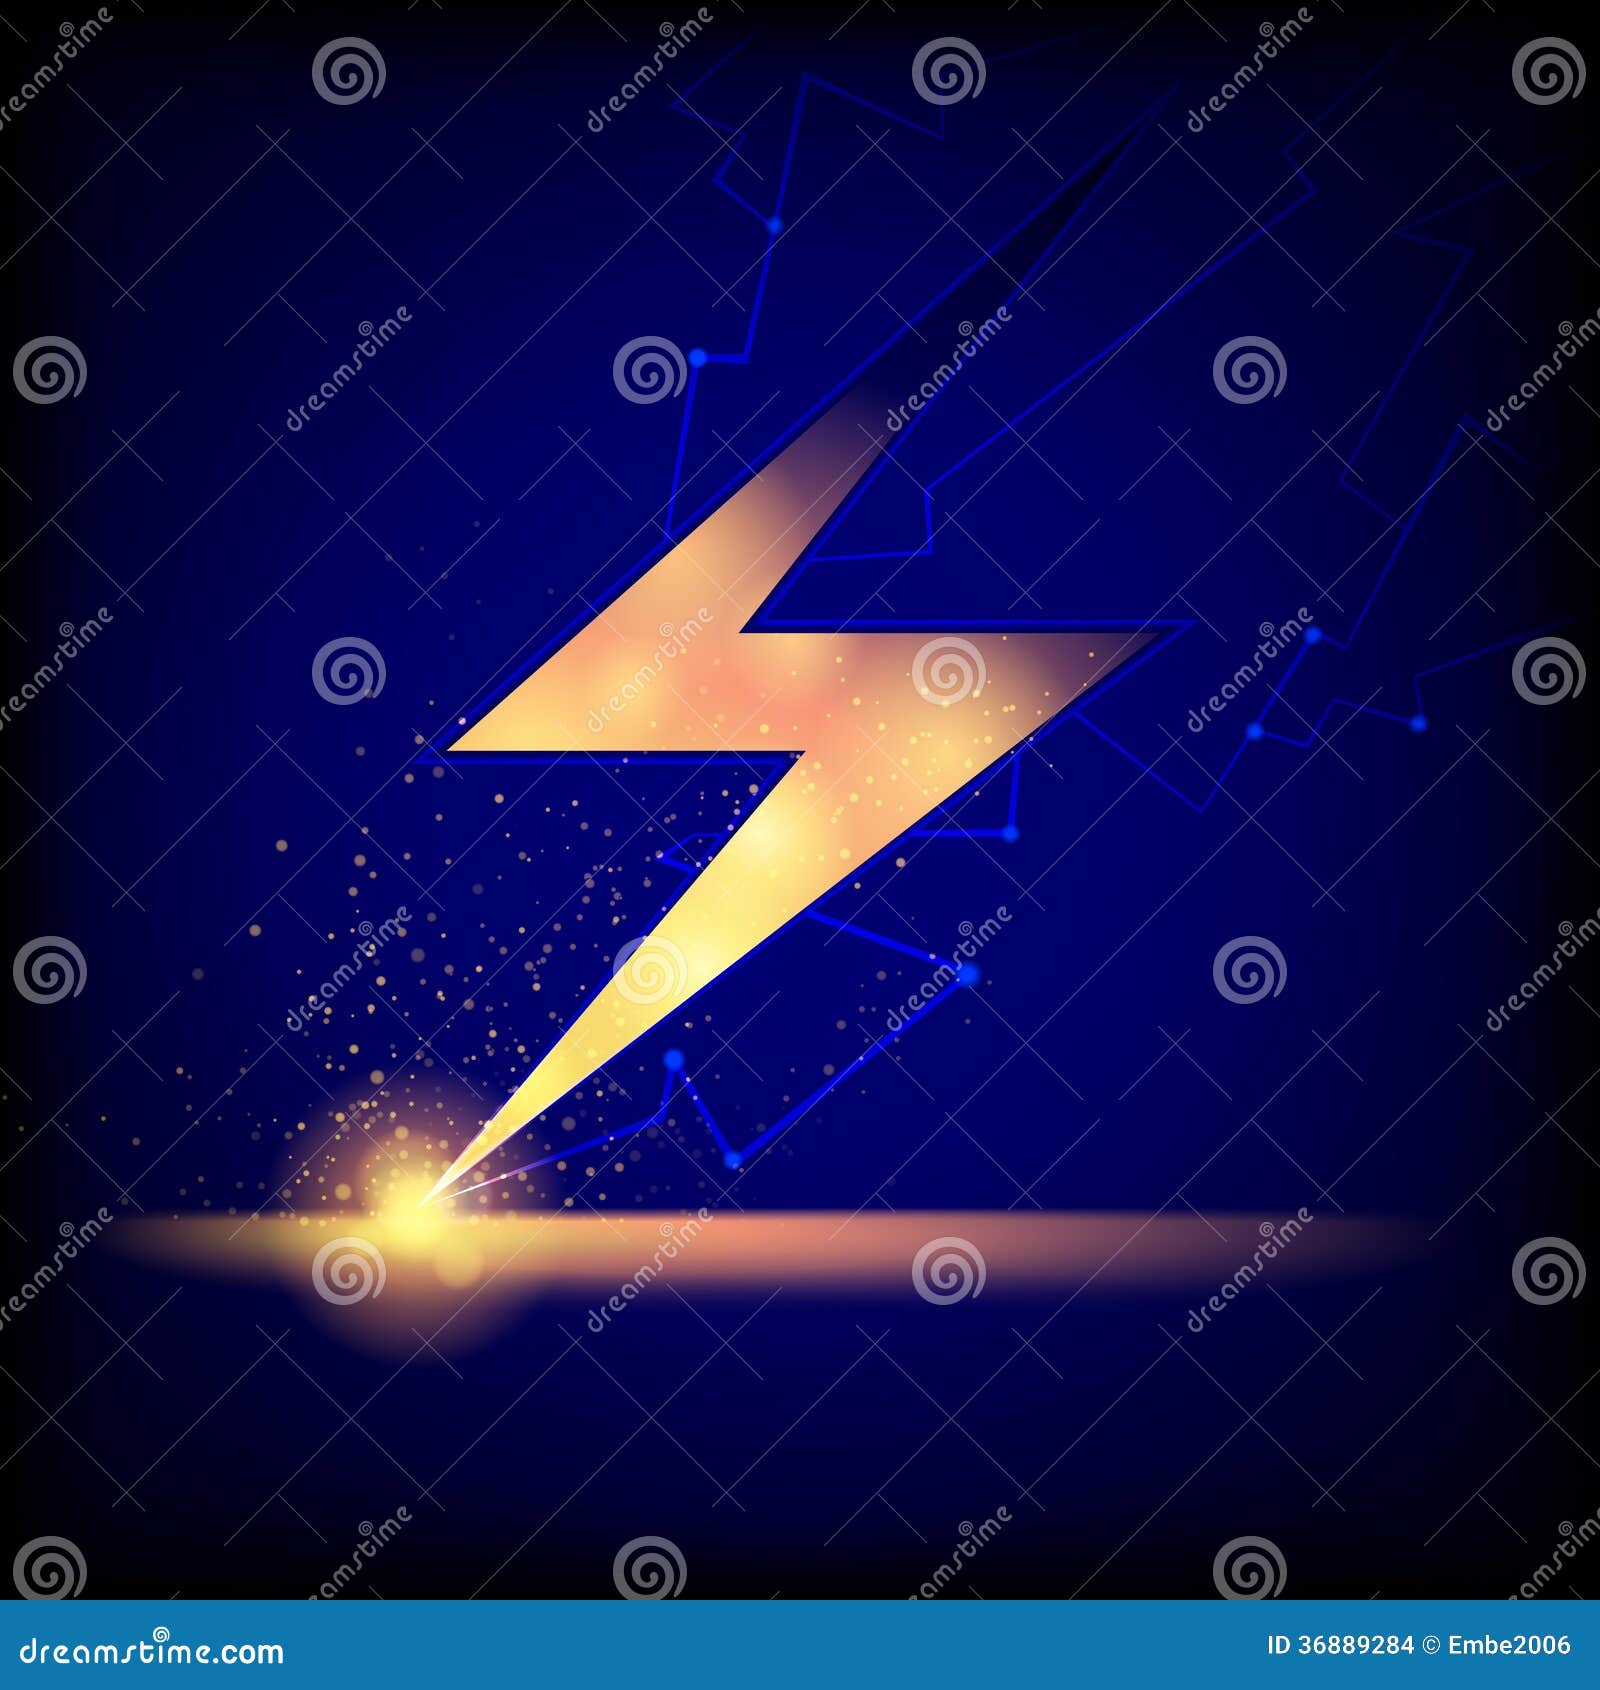 lightning bolt background